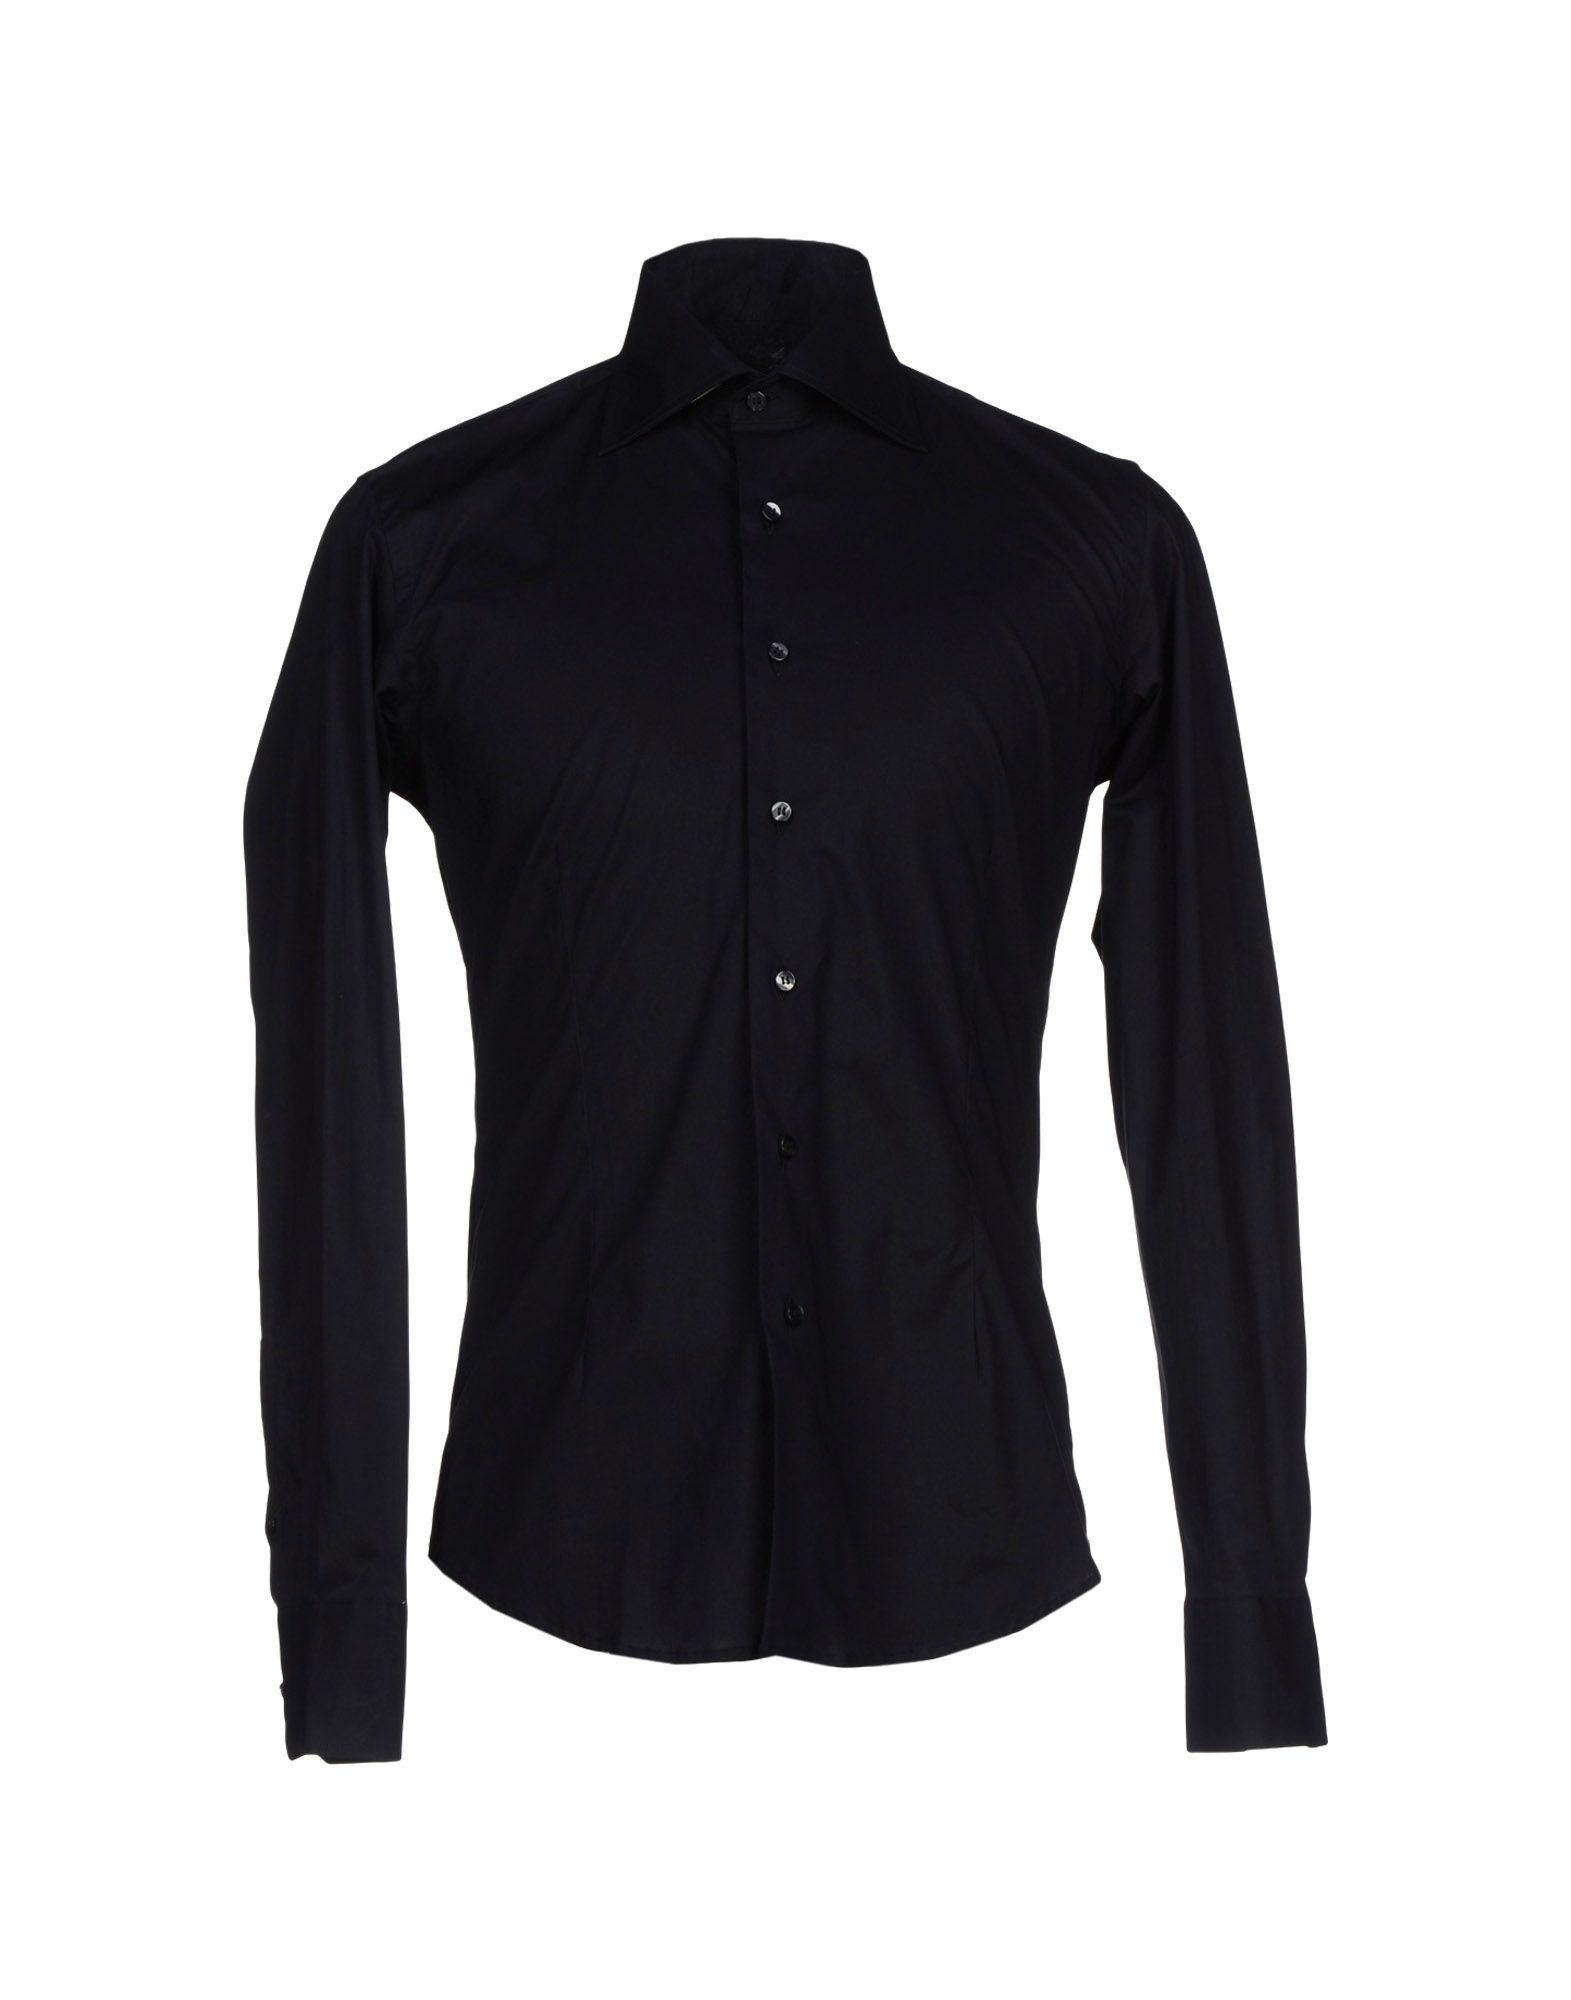 Lyst - Valentino Shirt in Black for Men